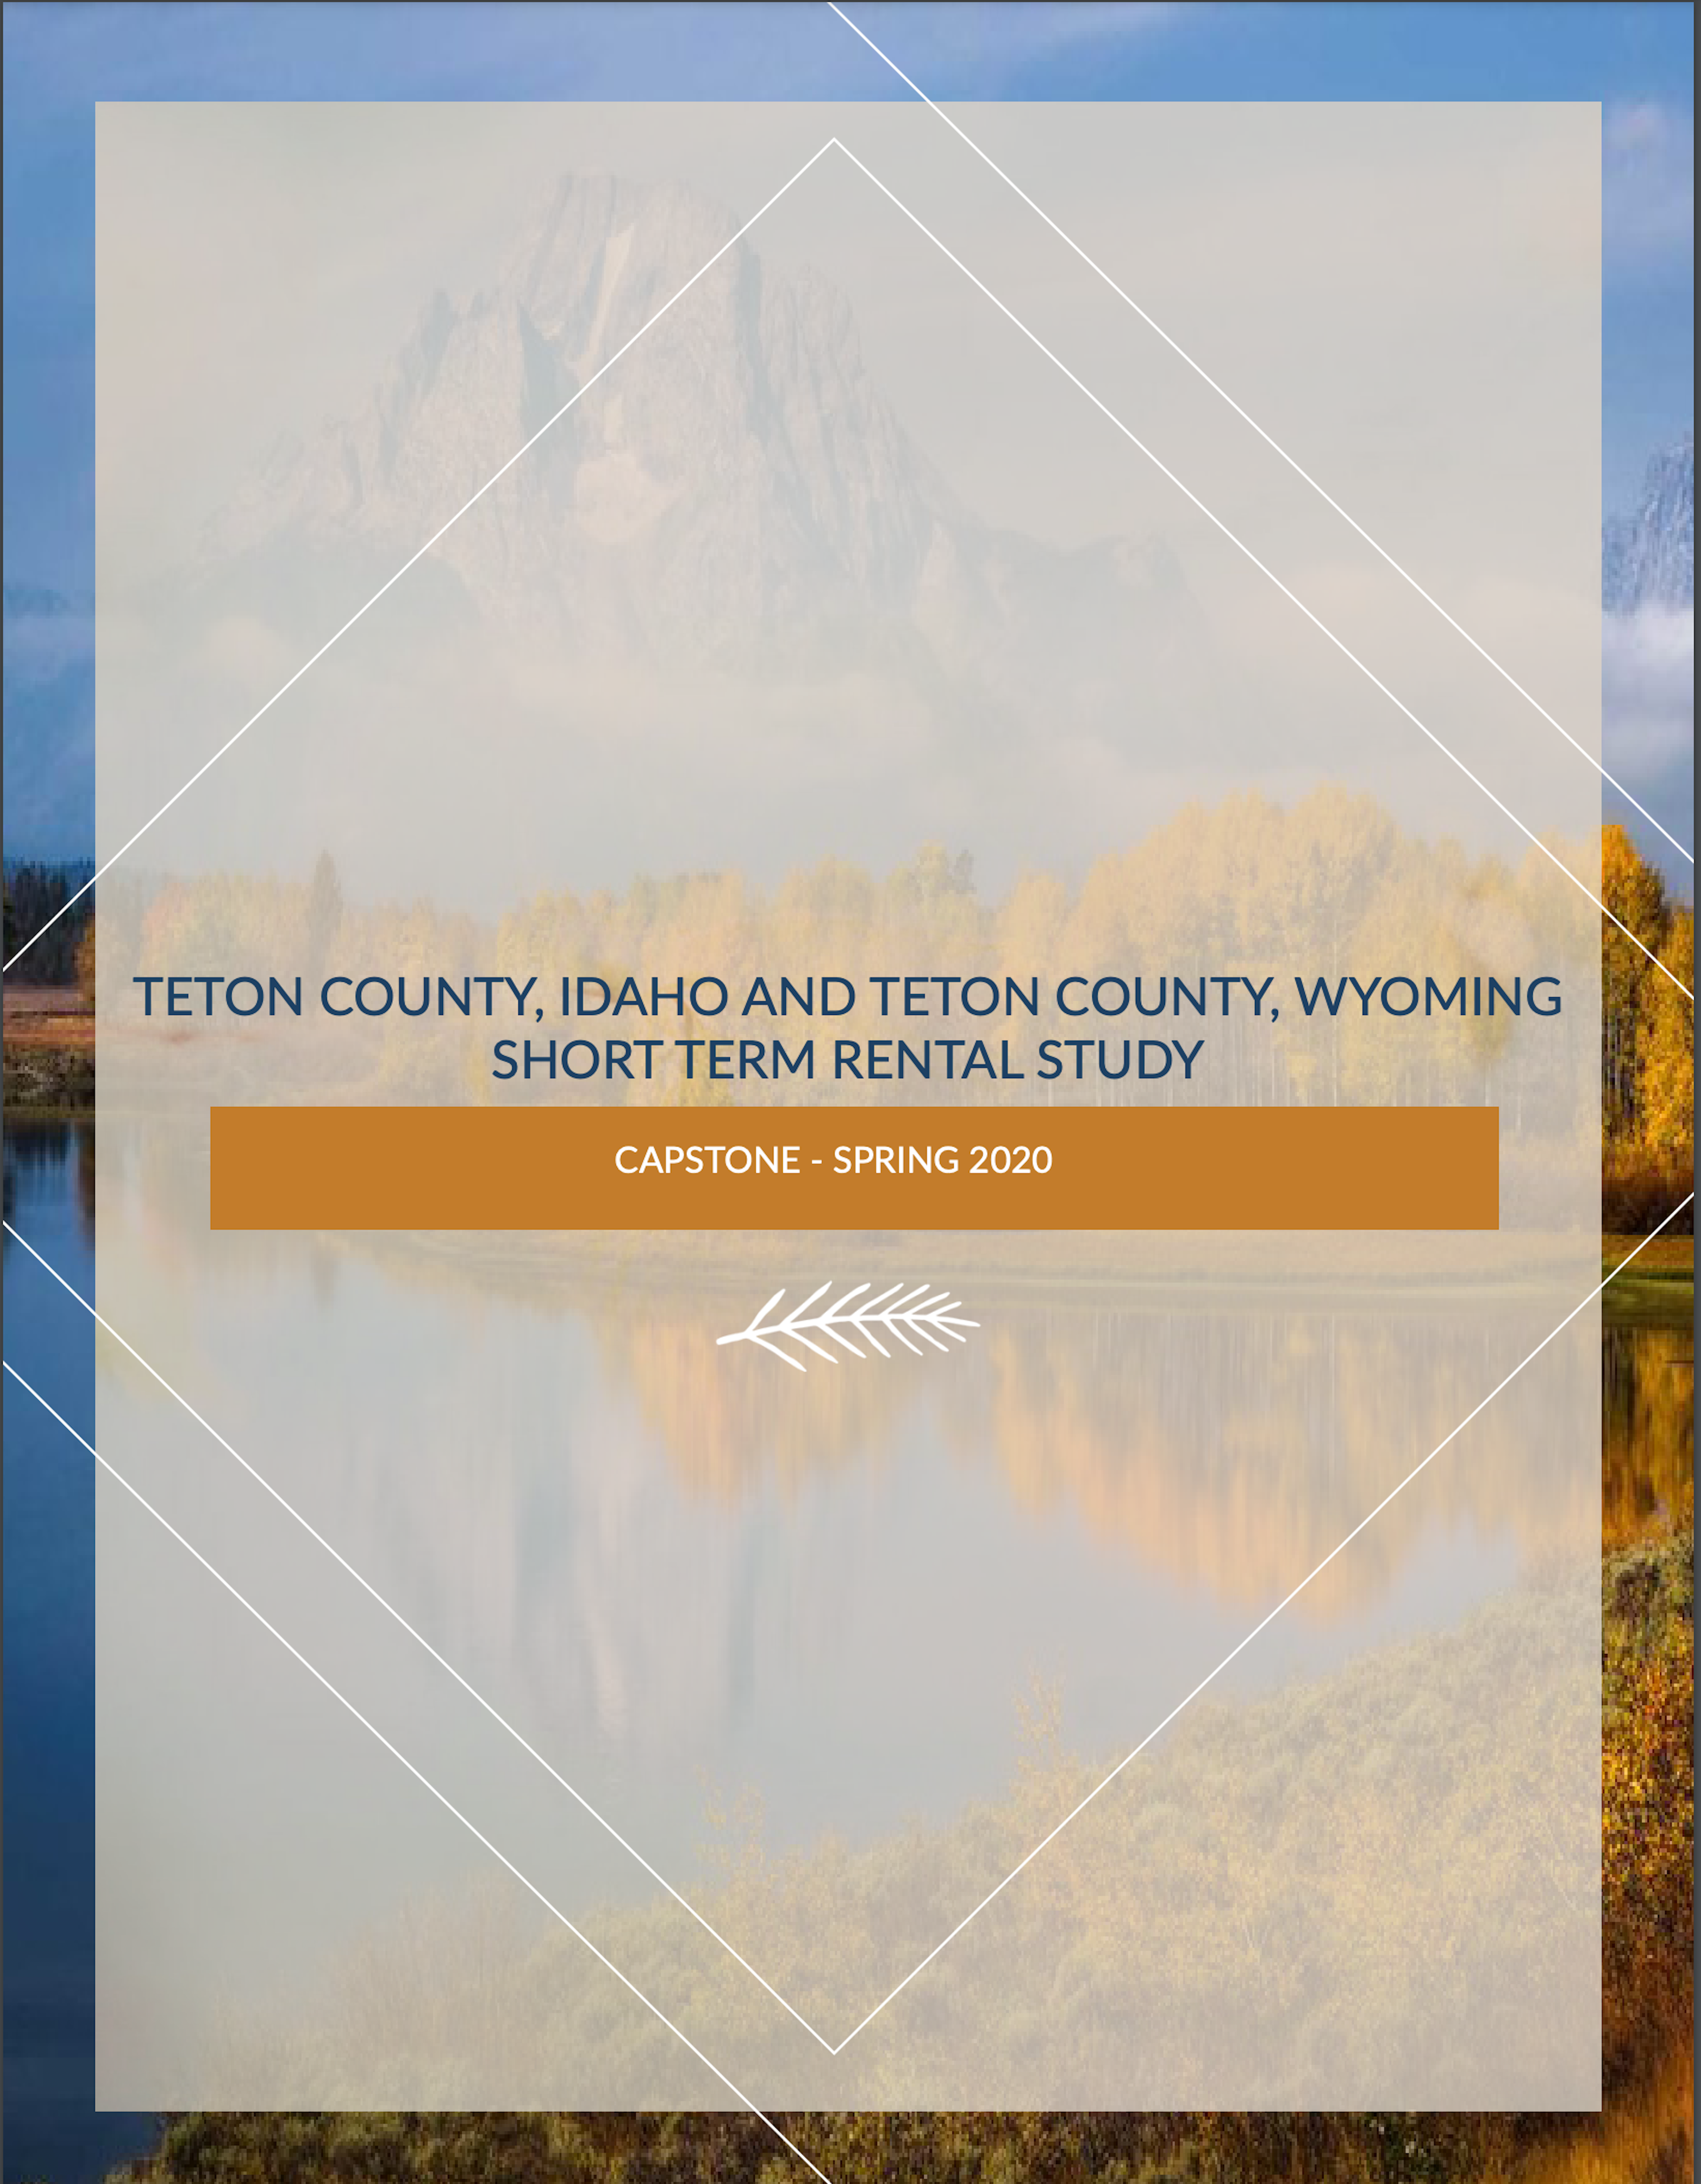 Teton County Idaho Short Term Rental Study Cover Image